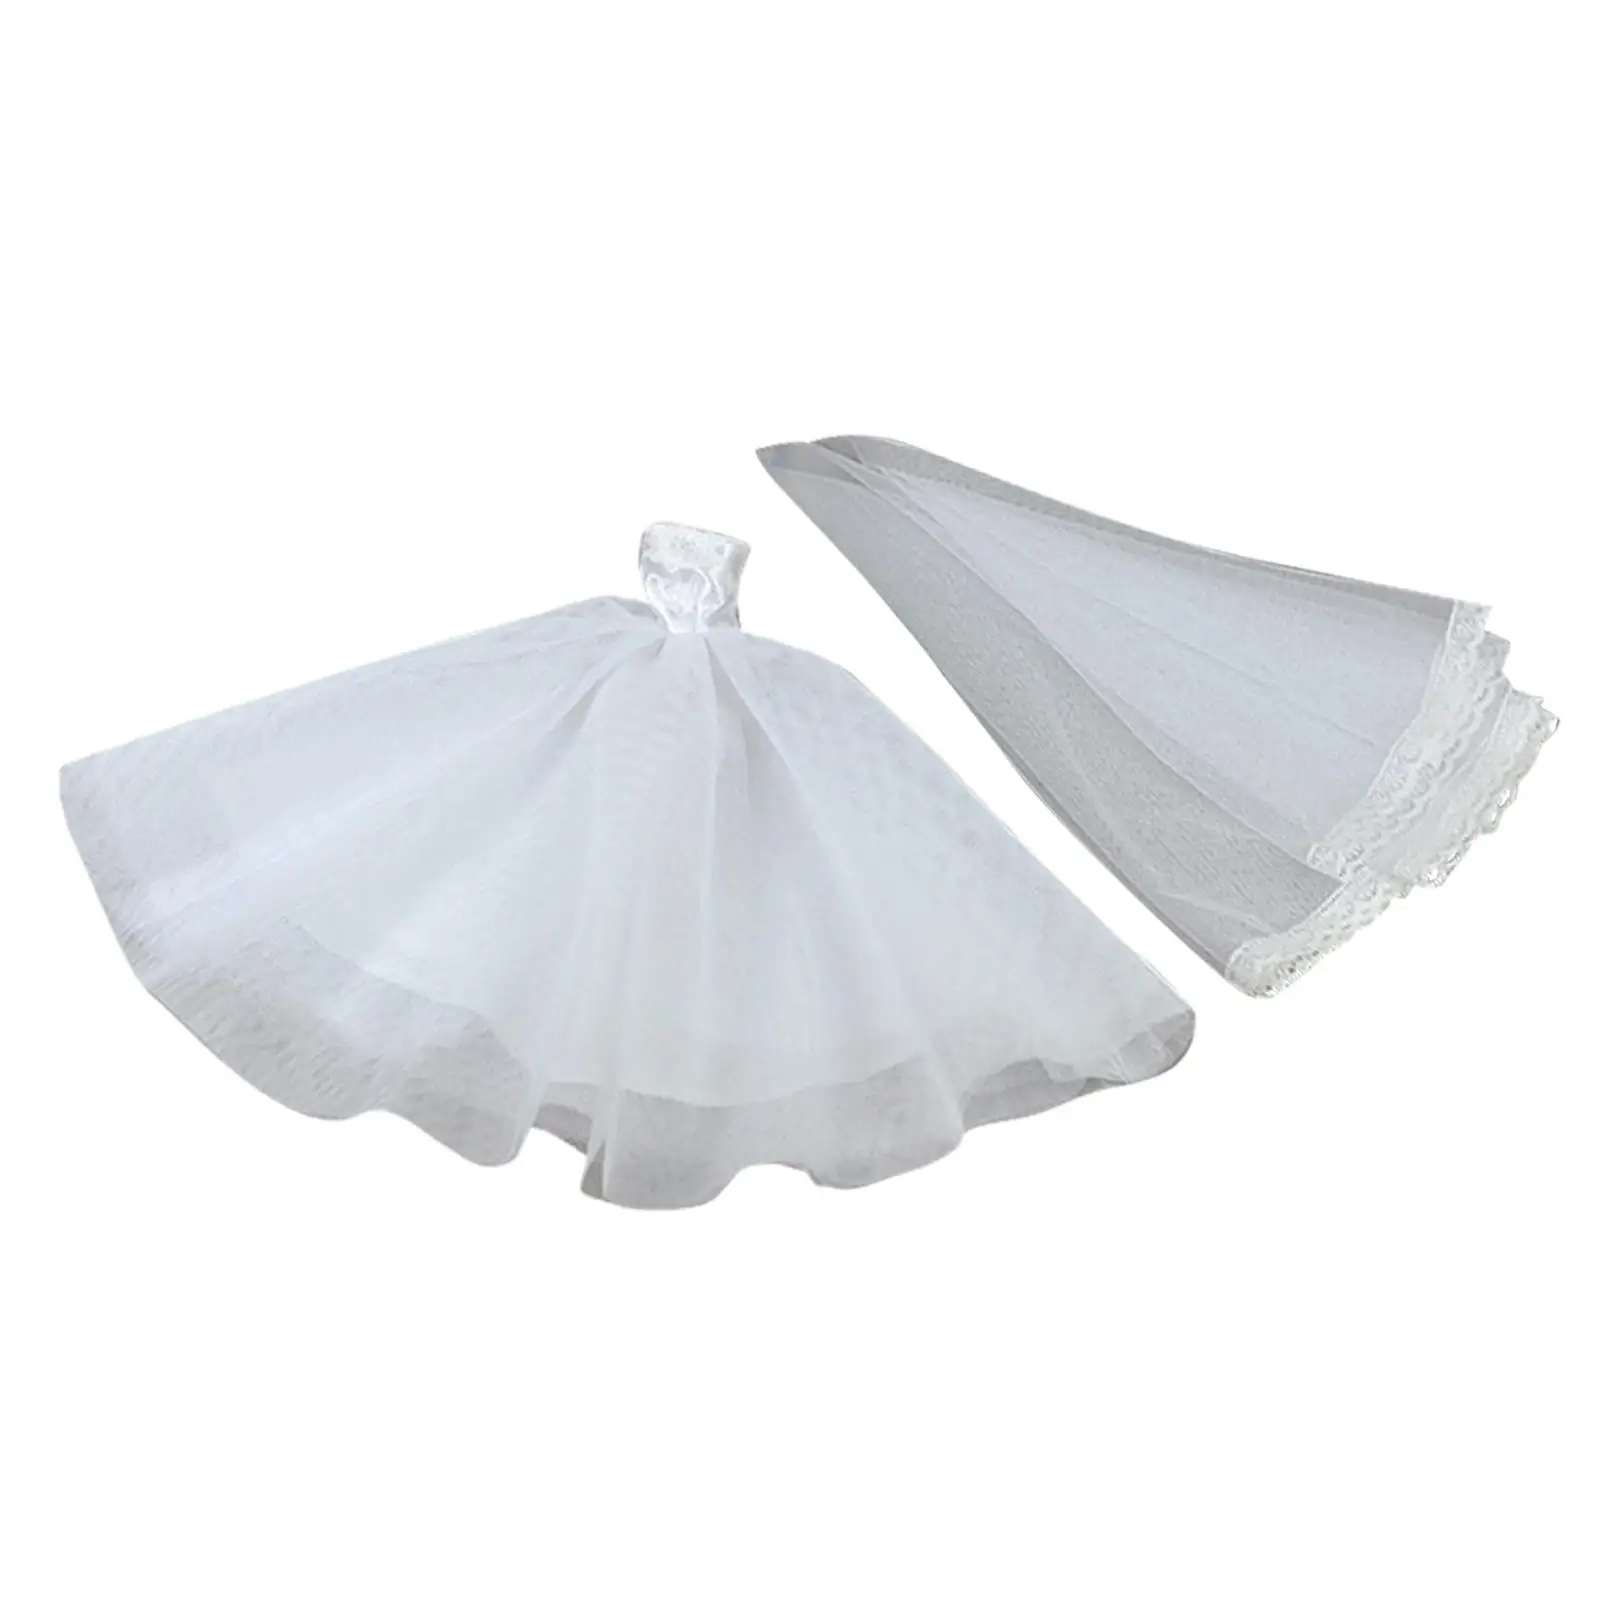 Fashion 1:6 Doll Girl Wedding Dress Clothing Kit for 12inch Dolls Dress